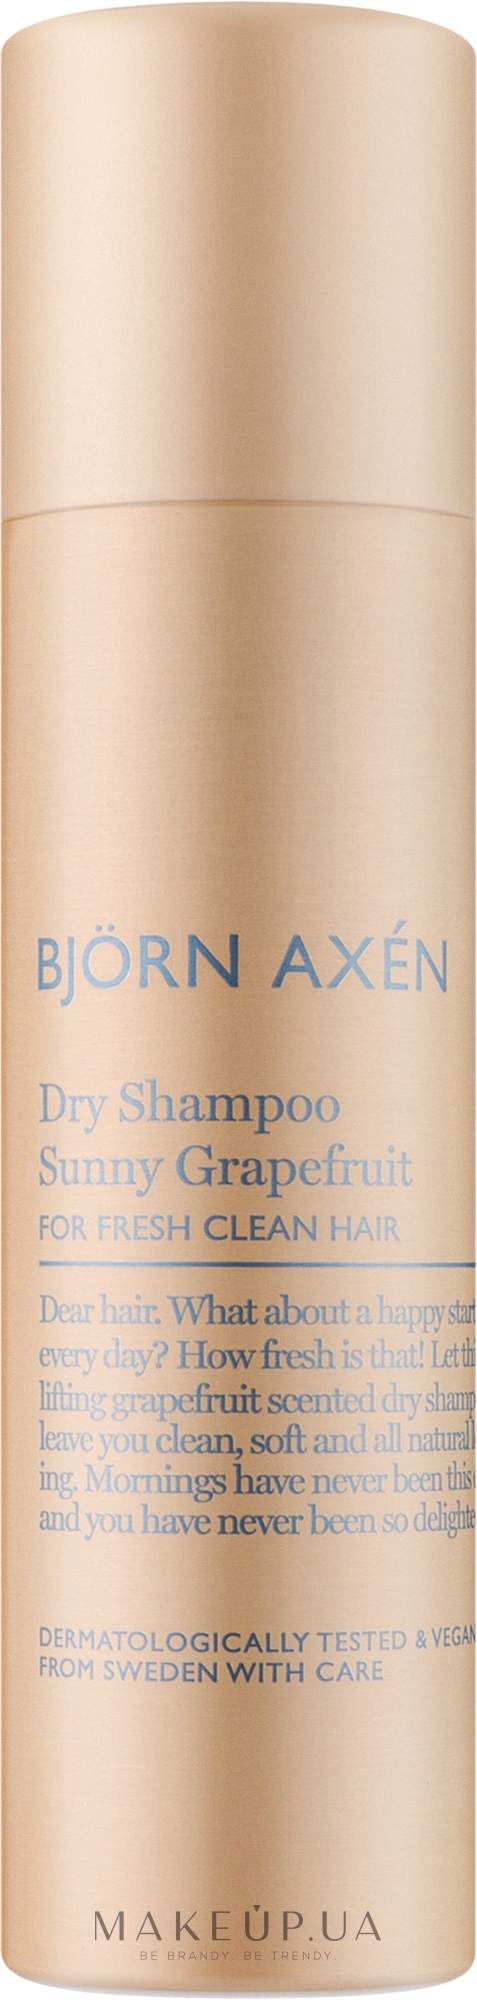 Сухой шампунь с ароматом грейпфрута - BjOrn AxEn Dry Shampoo Sunny Grapefruit — фото 150ml